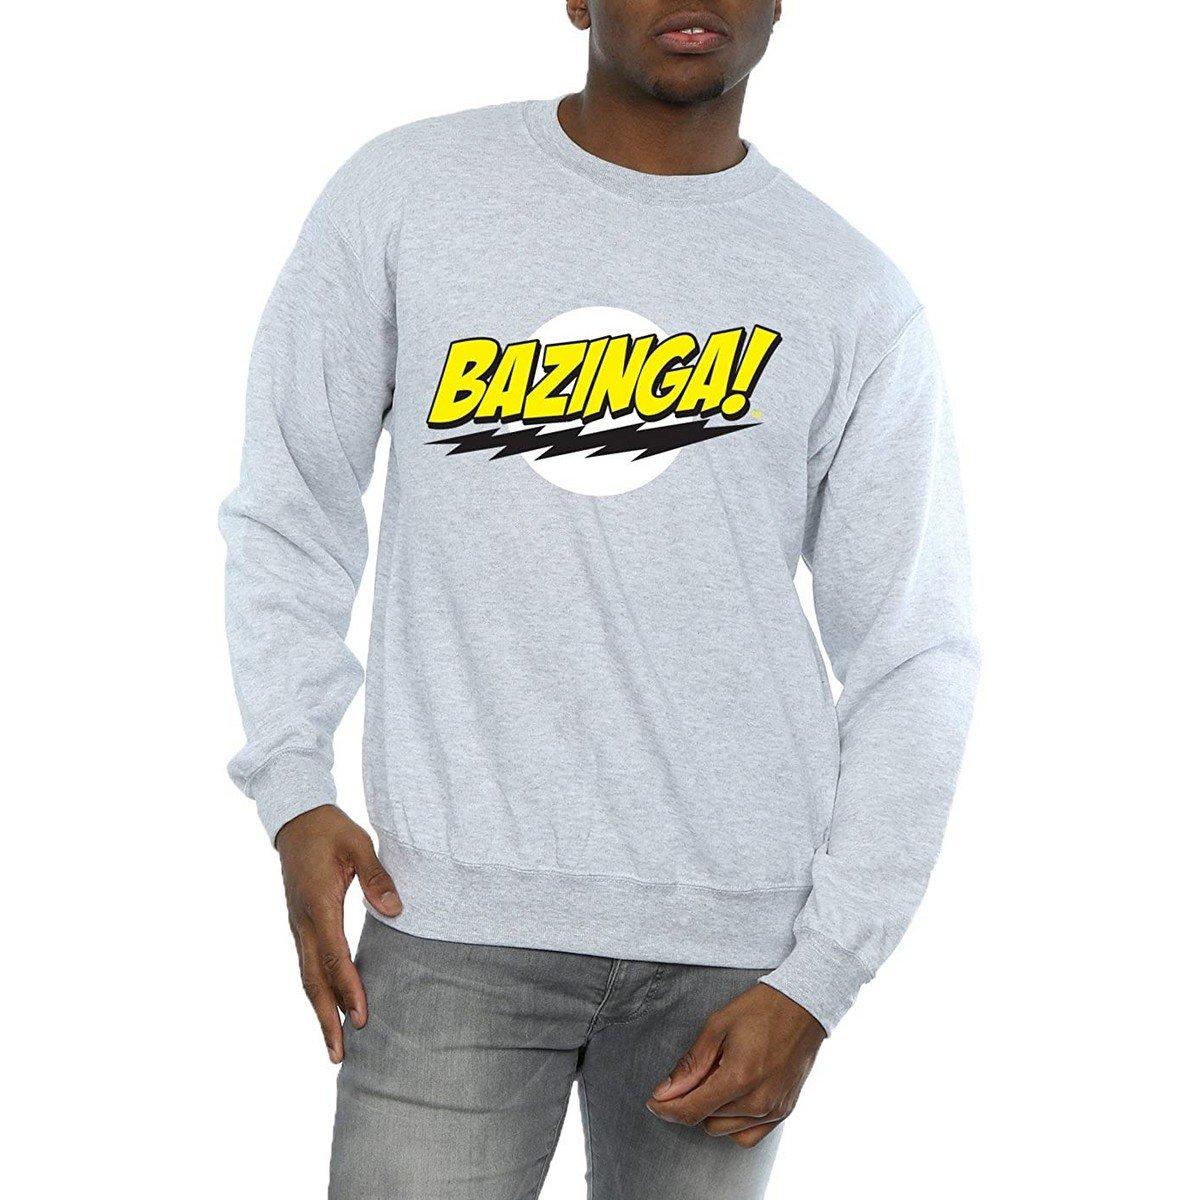 Bazinga Sweatshirt Herren Grau S von The Big Bang Theory